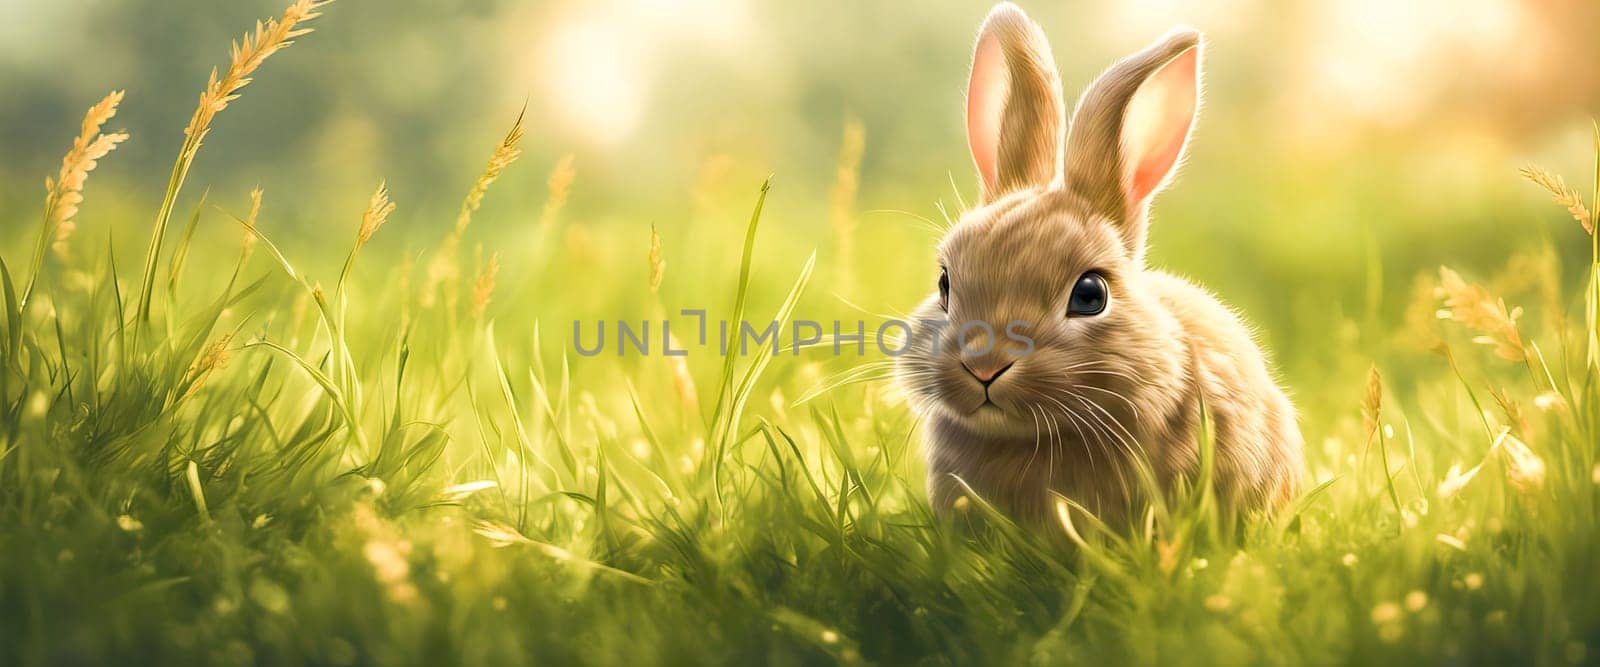 Cute adorable fluffy rabbit sitting on green grass lawn at backyard. Small by EkaterinaPereslavtseva